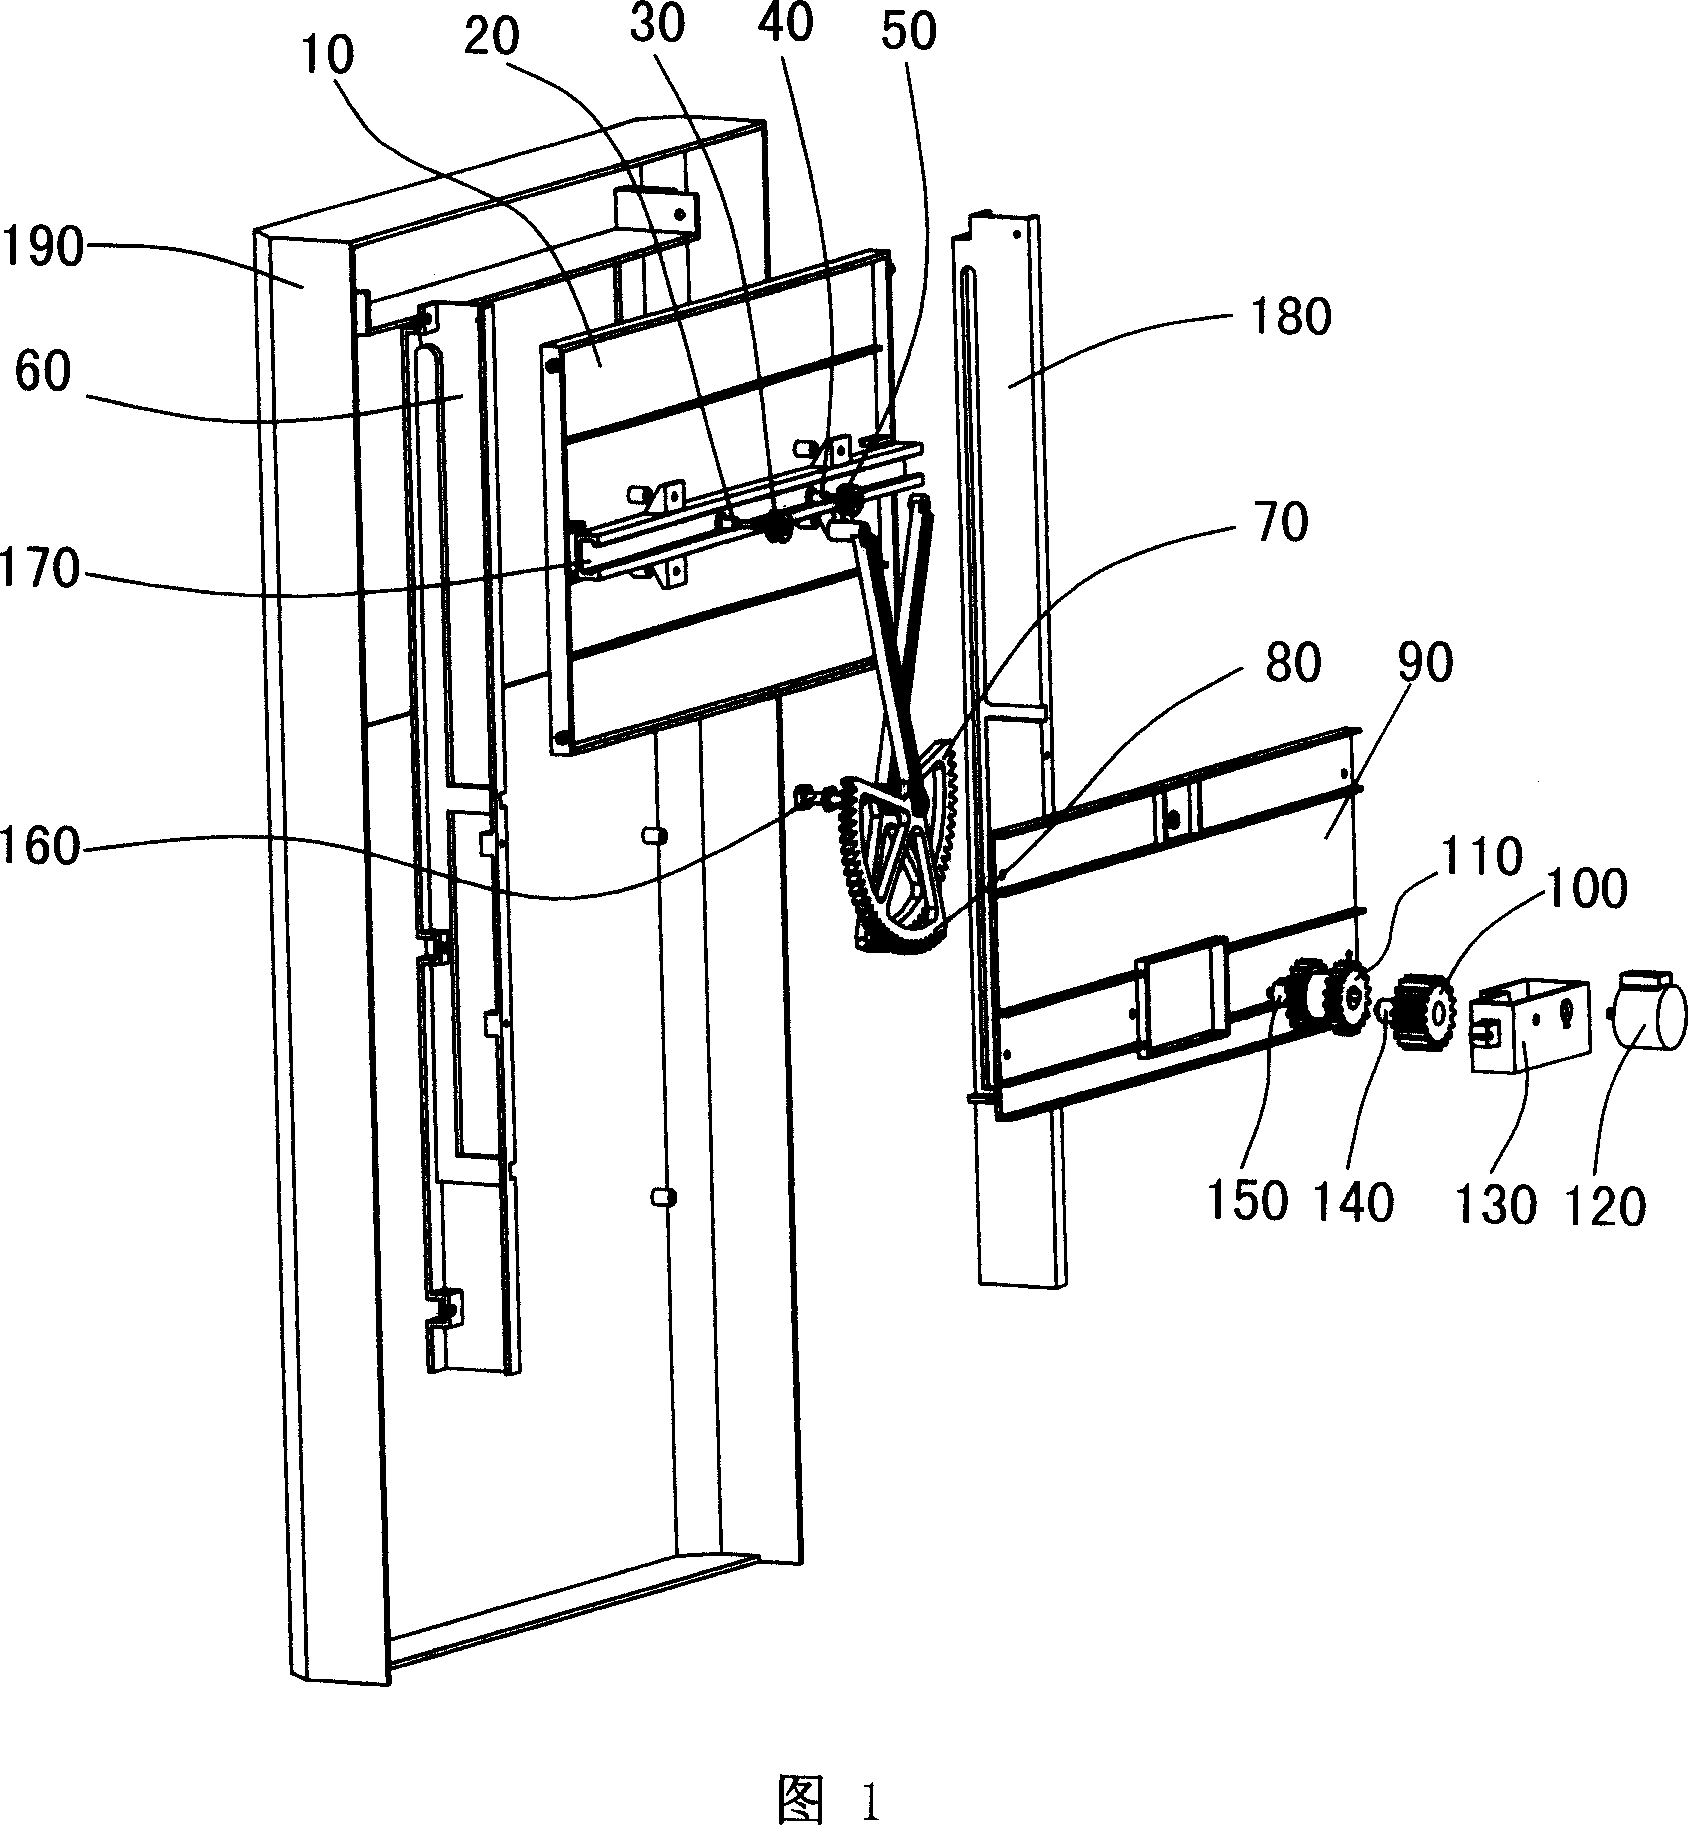 Cabinet air-conditioner with air exhaust opening slide door and start and stop method for slide door